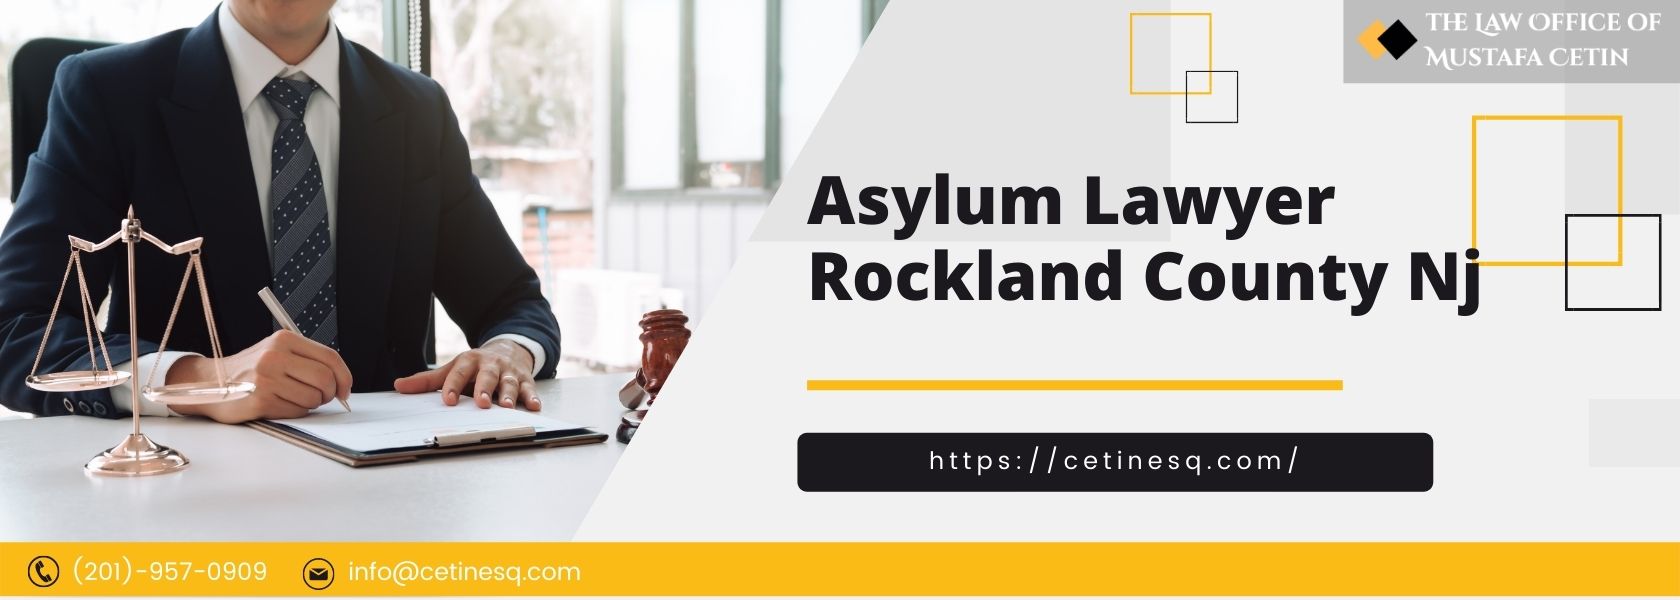 Asylum Lawyer Rockland County NY